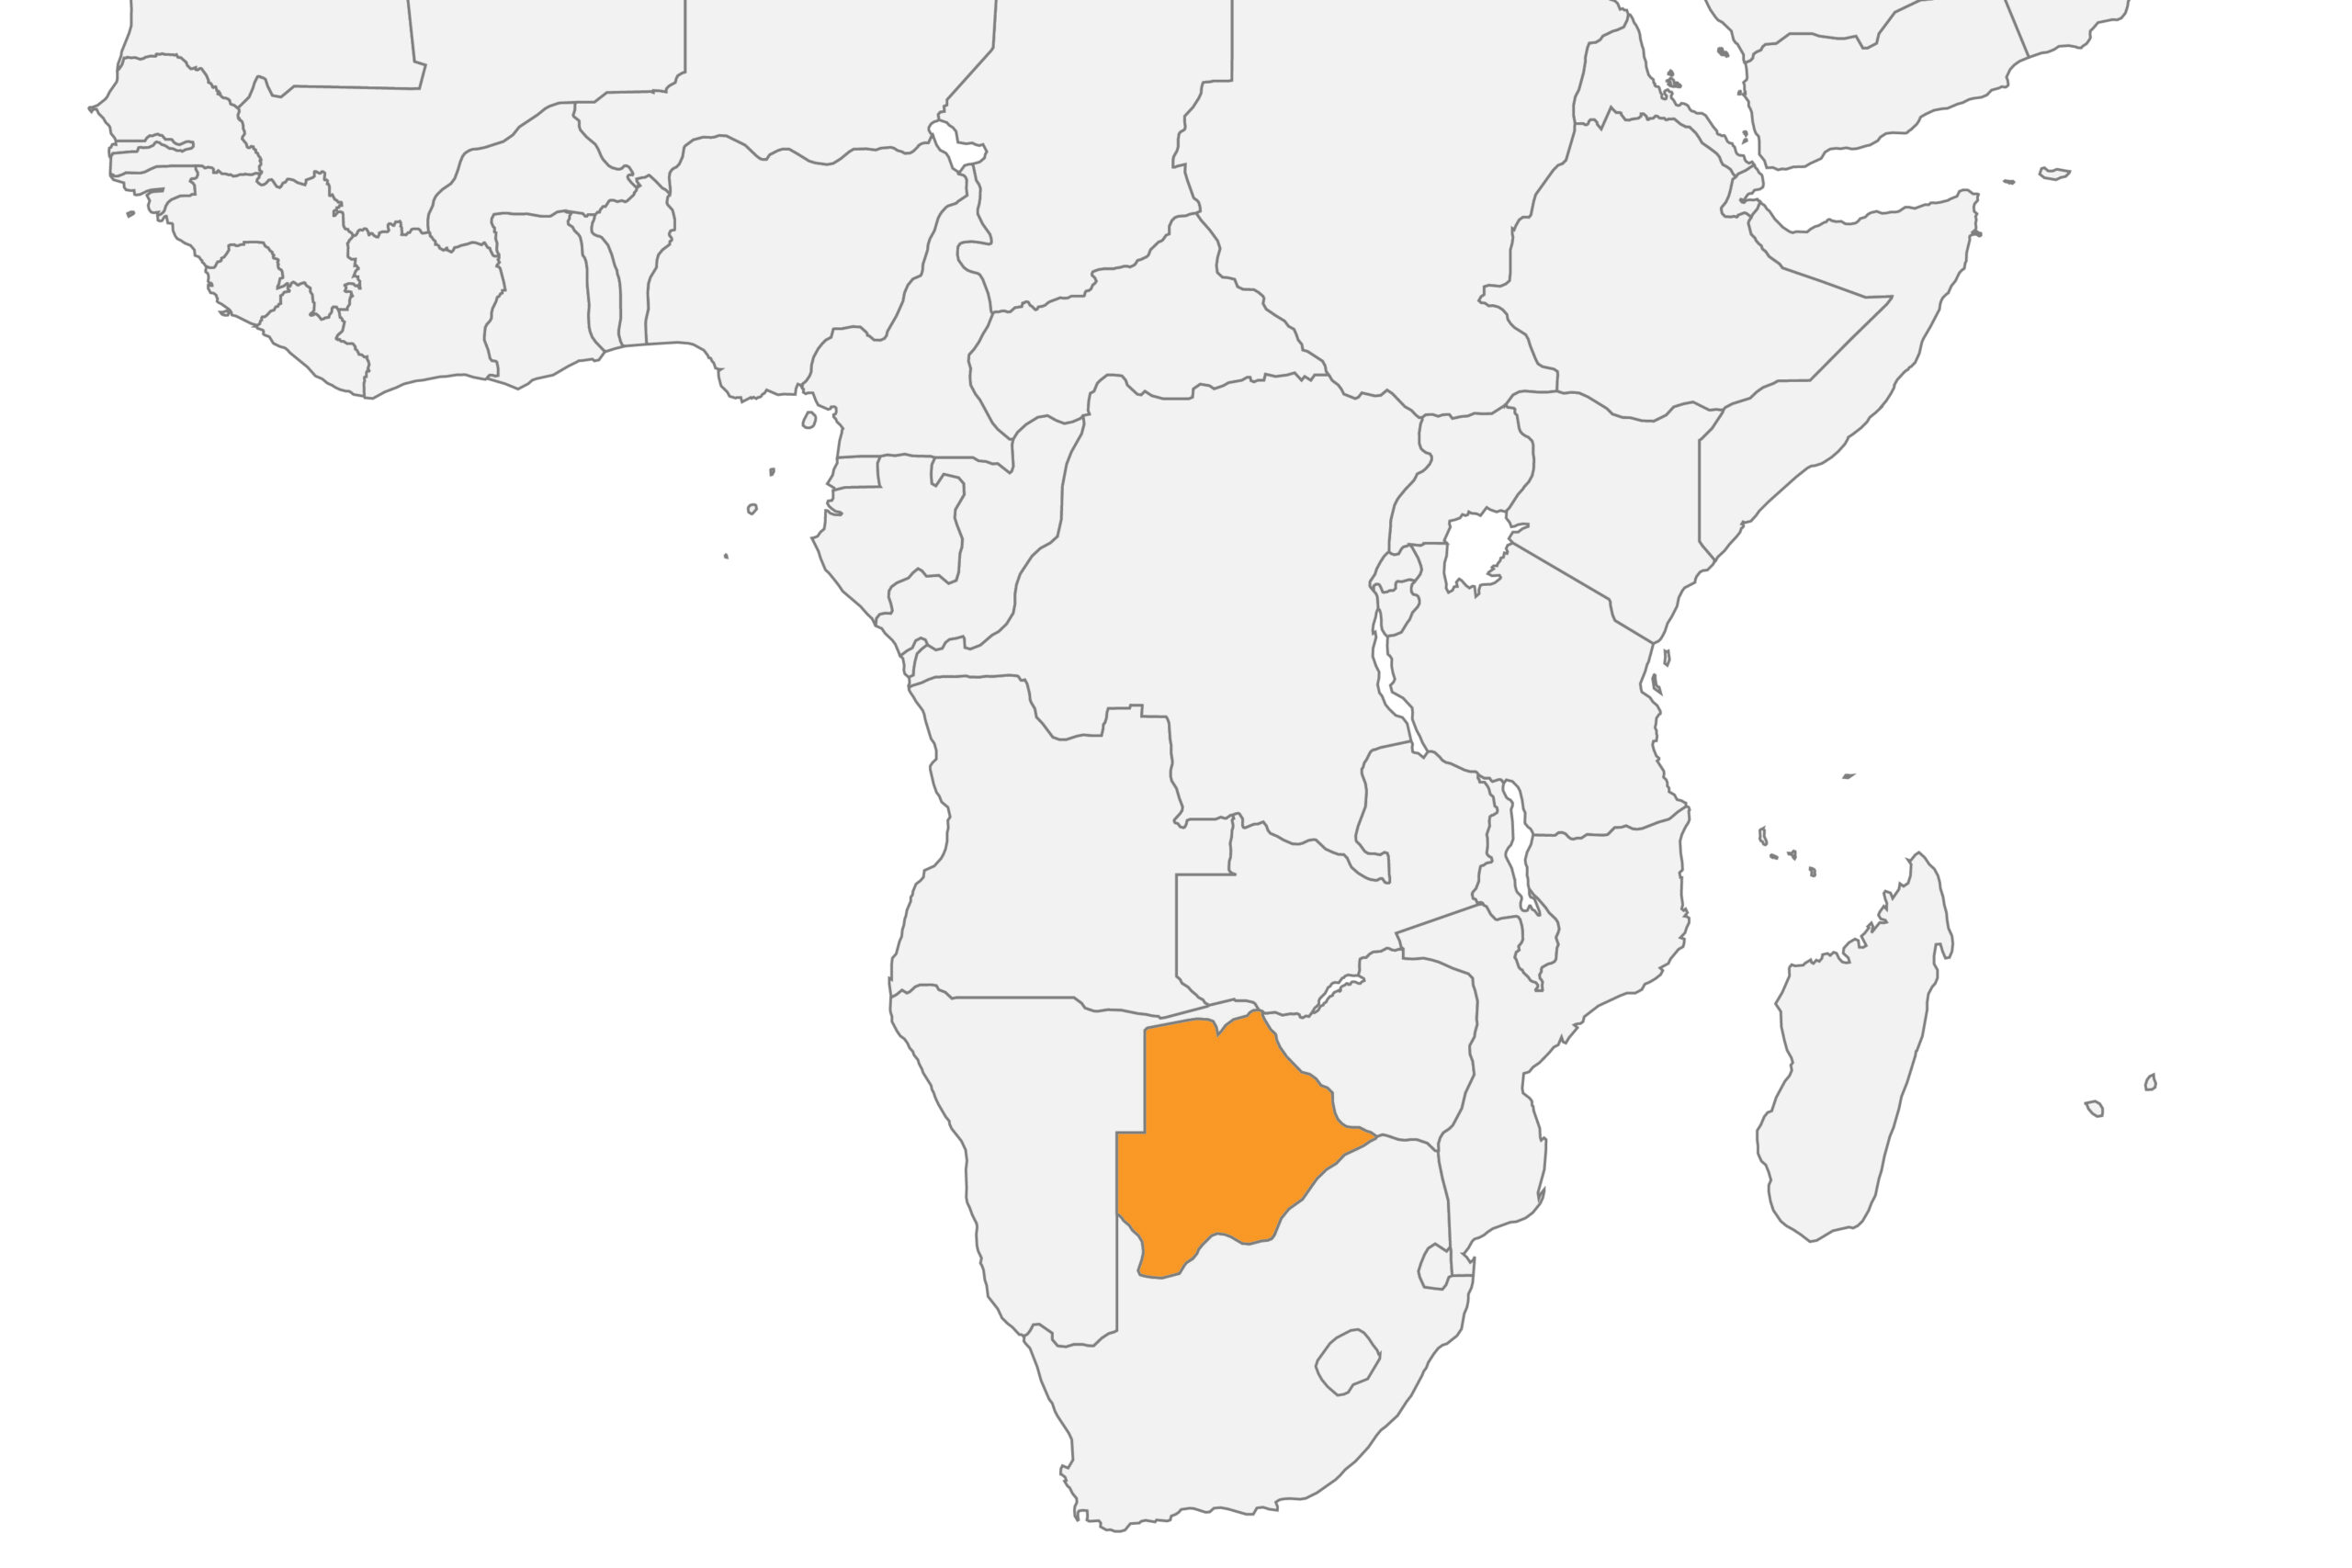 Botswana, in Africa